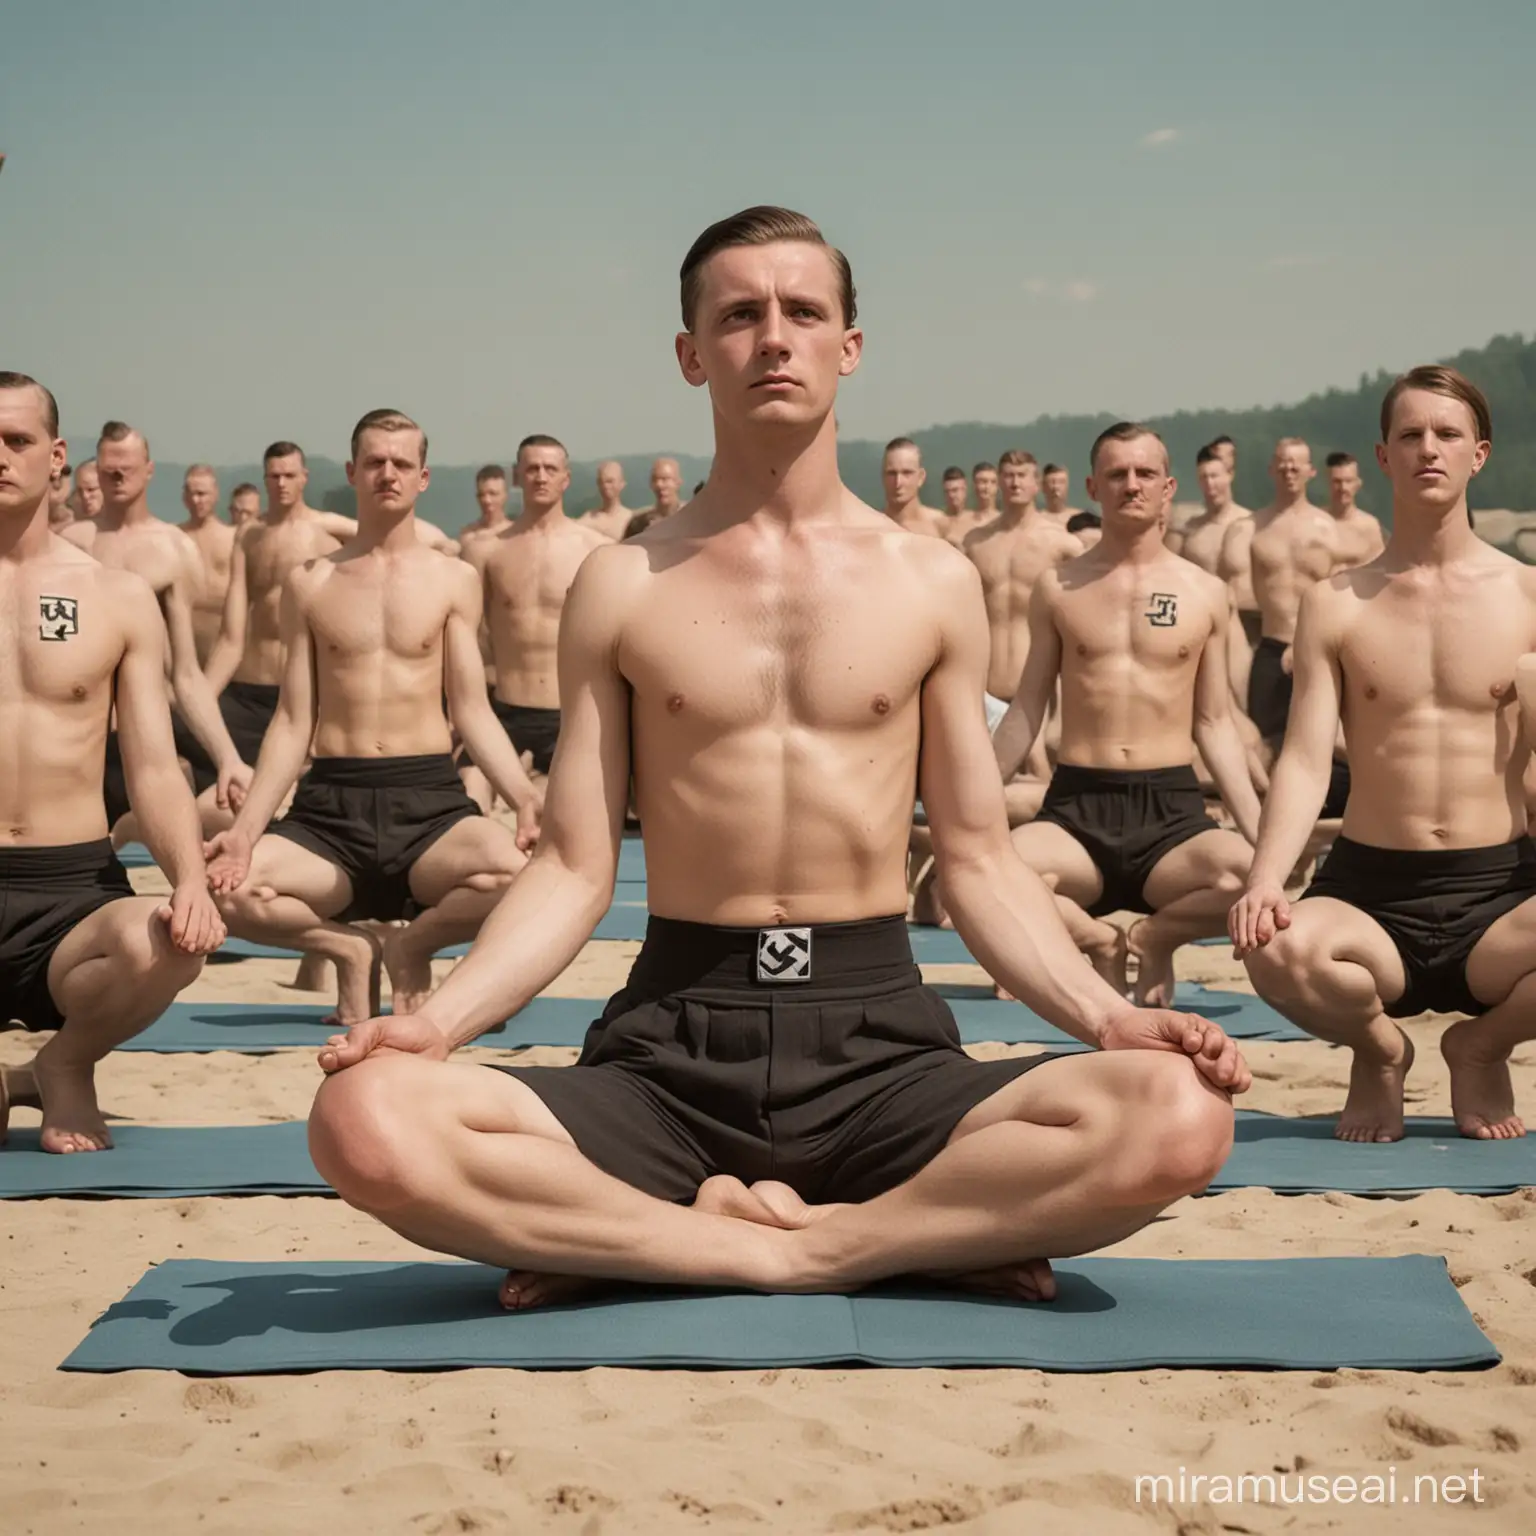 Controversial Historical Reenactment Nazi Yoga Session